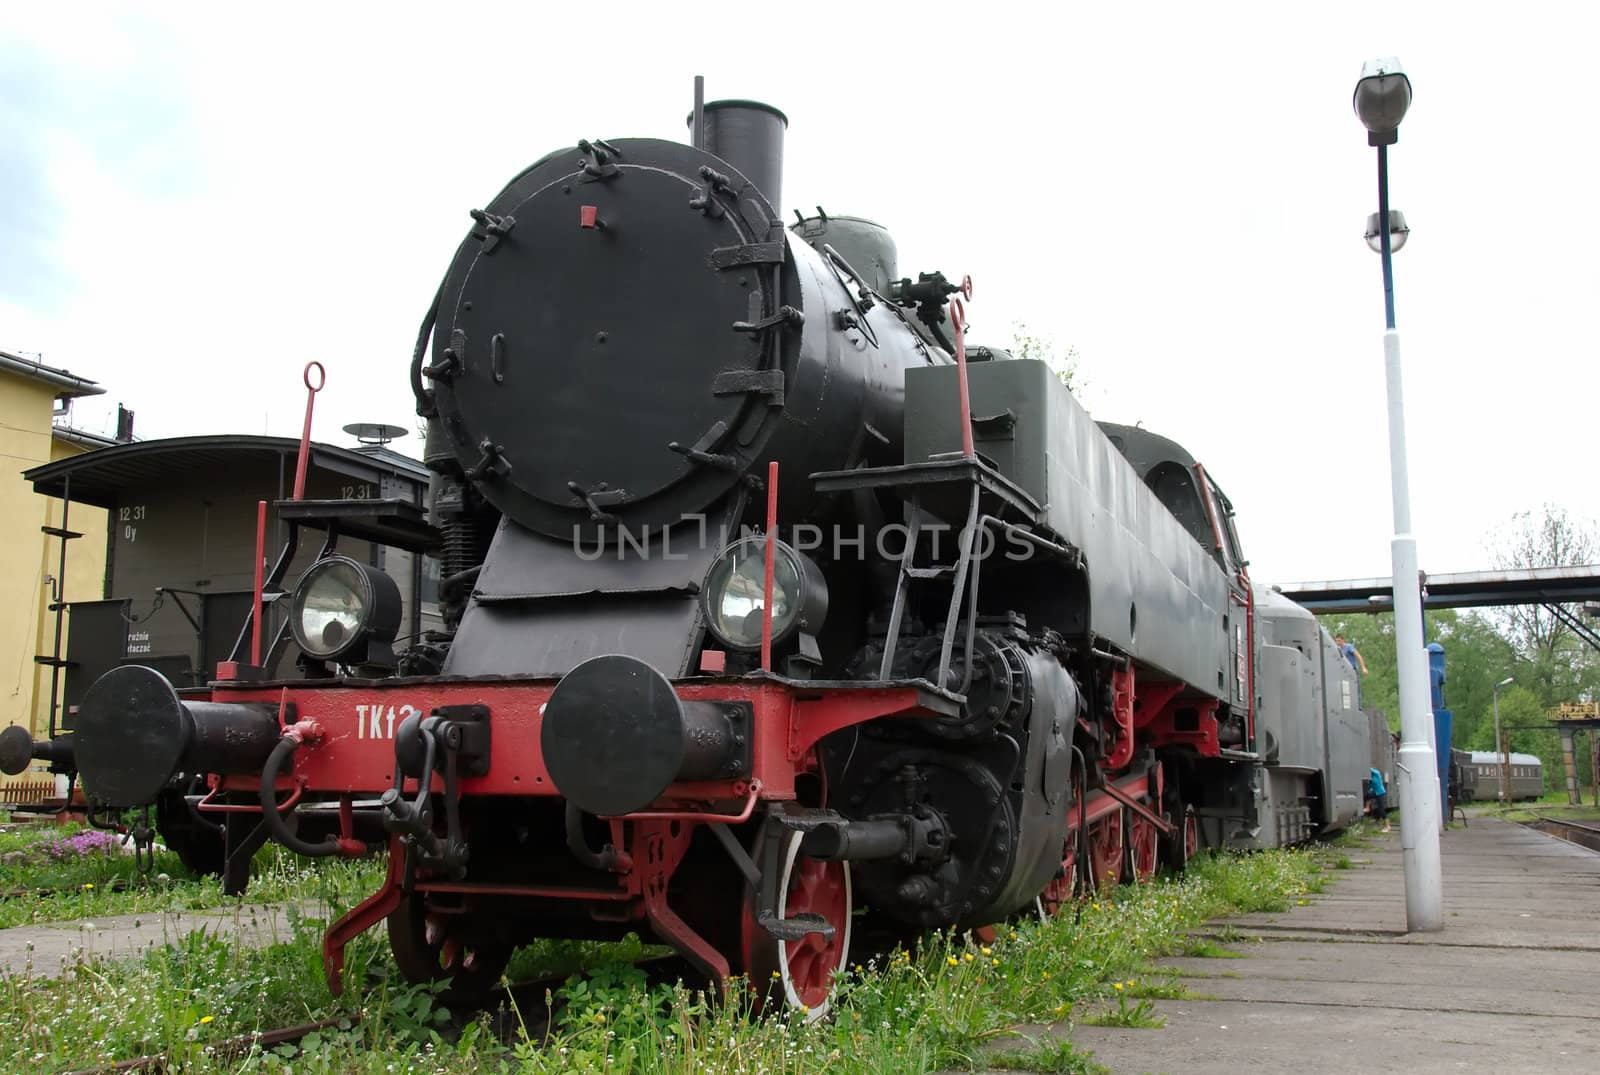 historic steam train in Poland by anki21